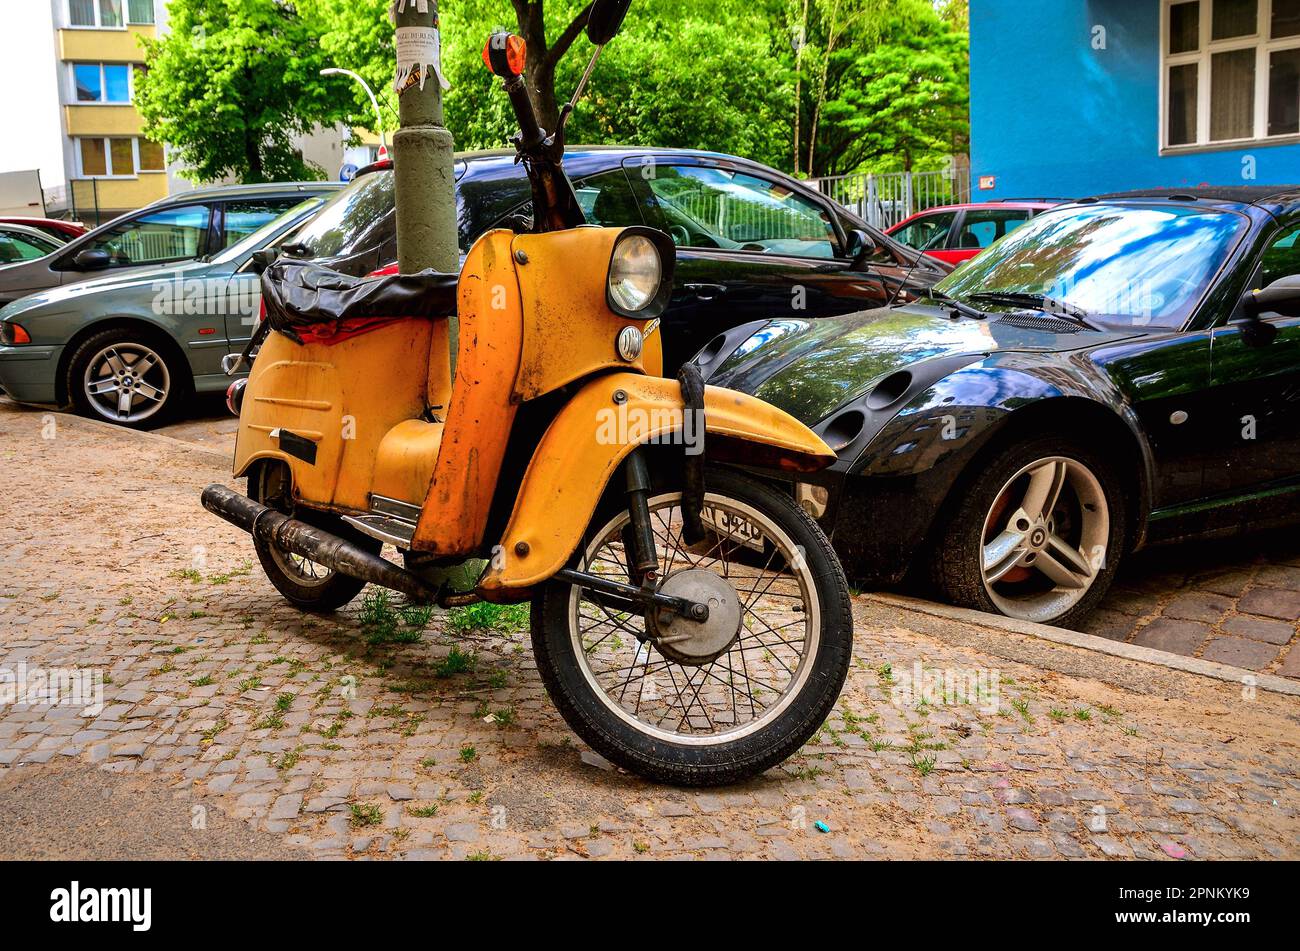 Berlin, Germany - April 30, 2014: Old motorcycle. Vintage orange motorcycle on parking area in Berlin, Germany. Stock Photo